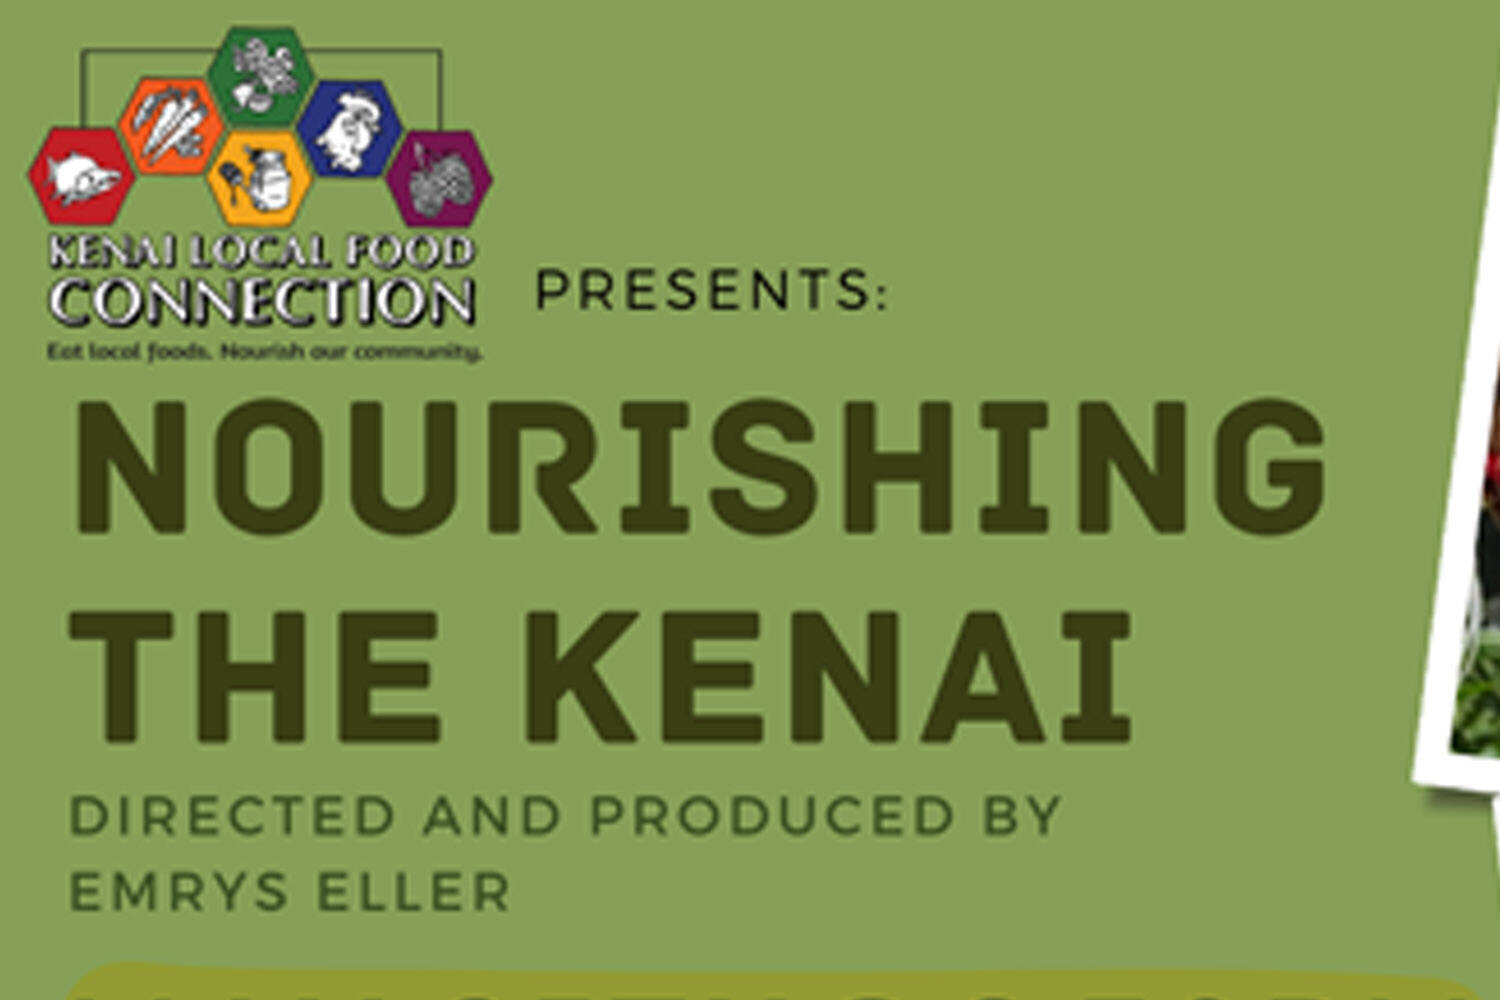 Promotional image for "Nourishing the Kenai." (Photo courtesy Kenai Local Food Connection)